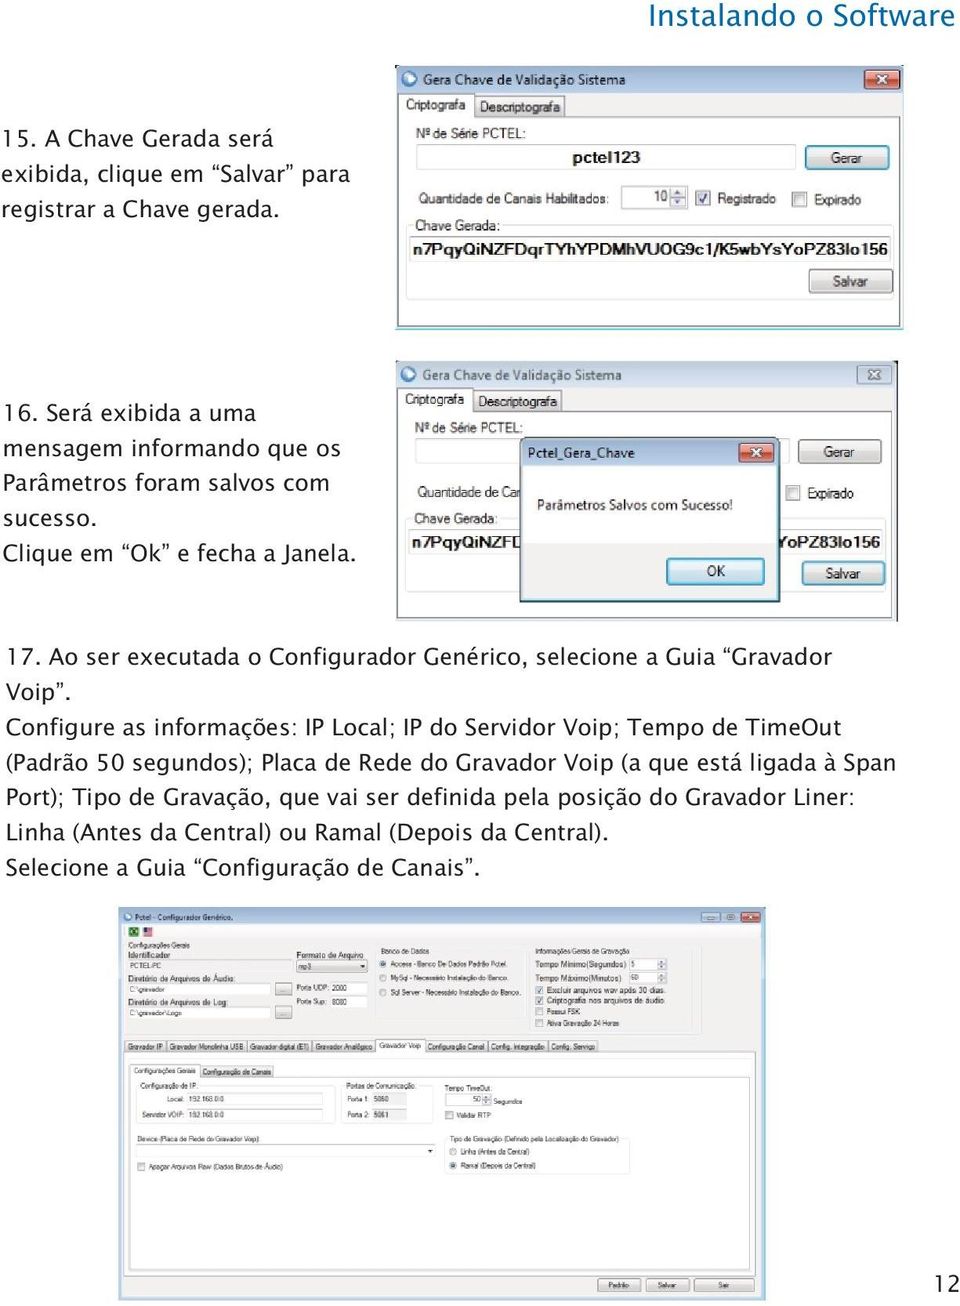 Ao ser executada o Configurador Genérico, selecione a Guia Gravador Voip.